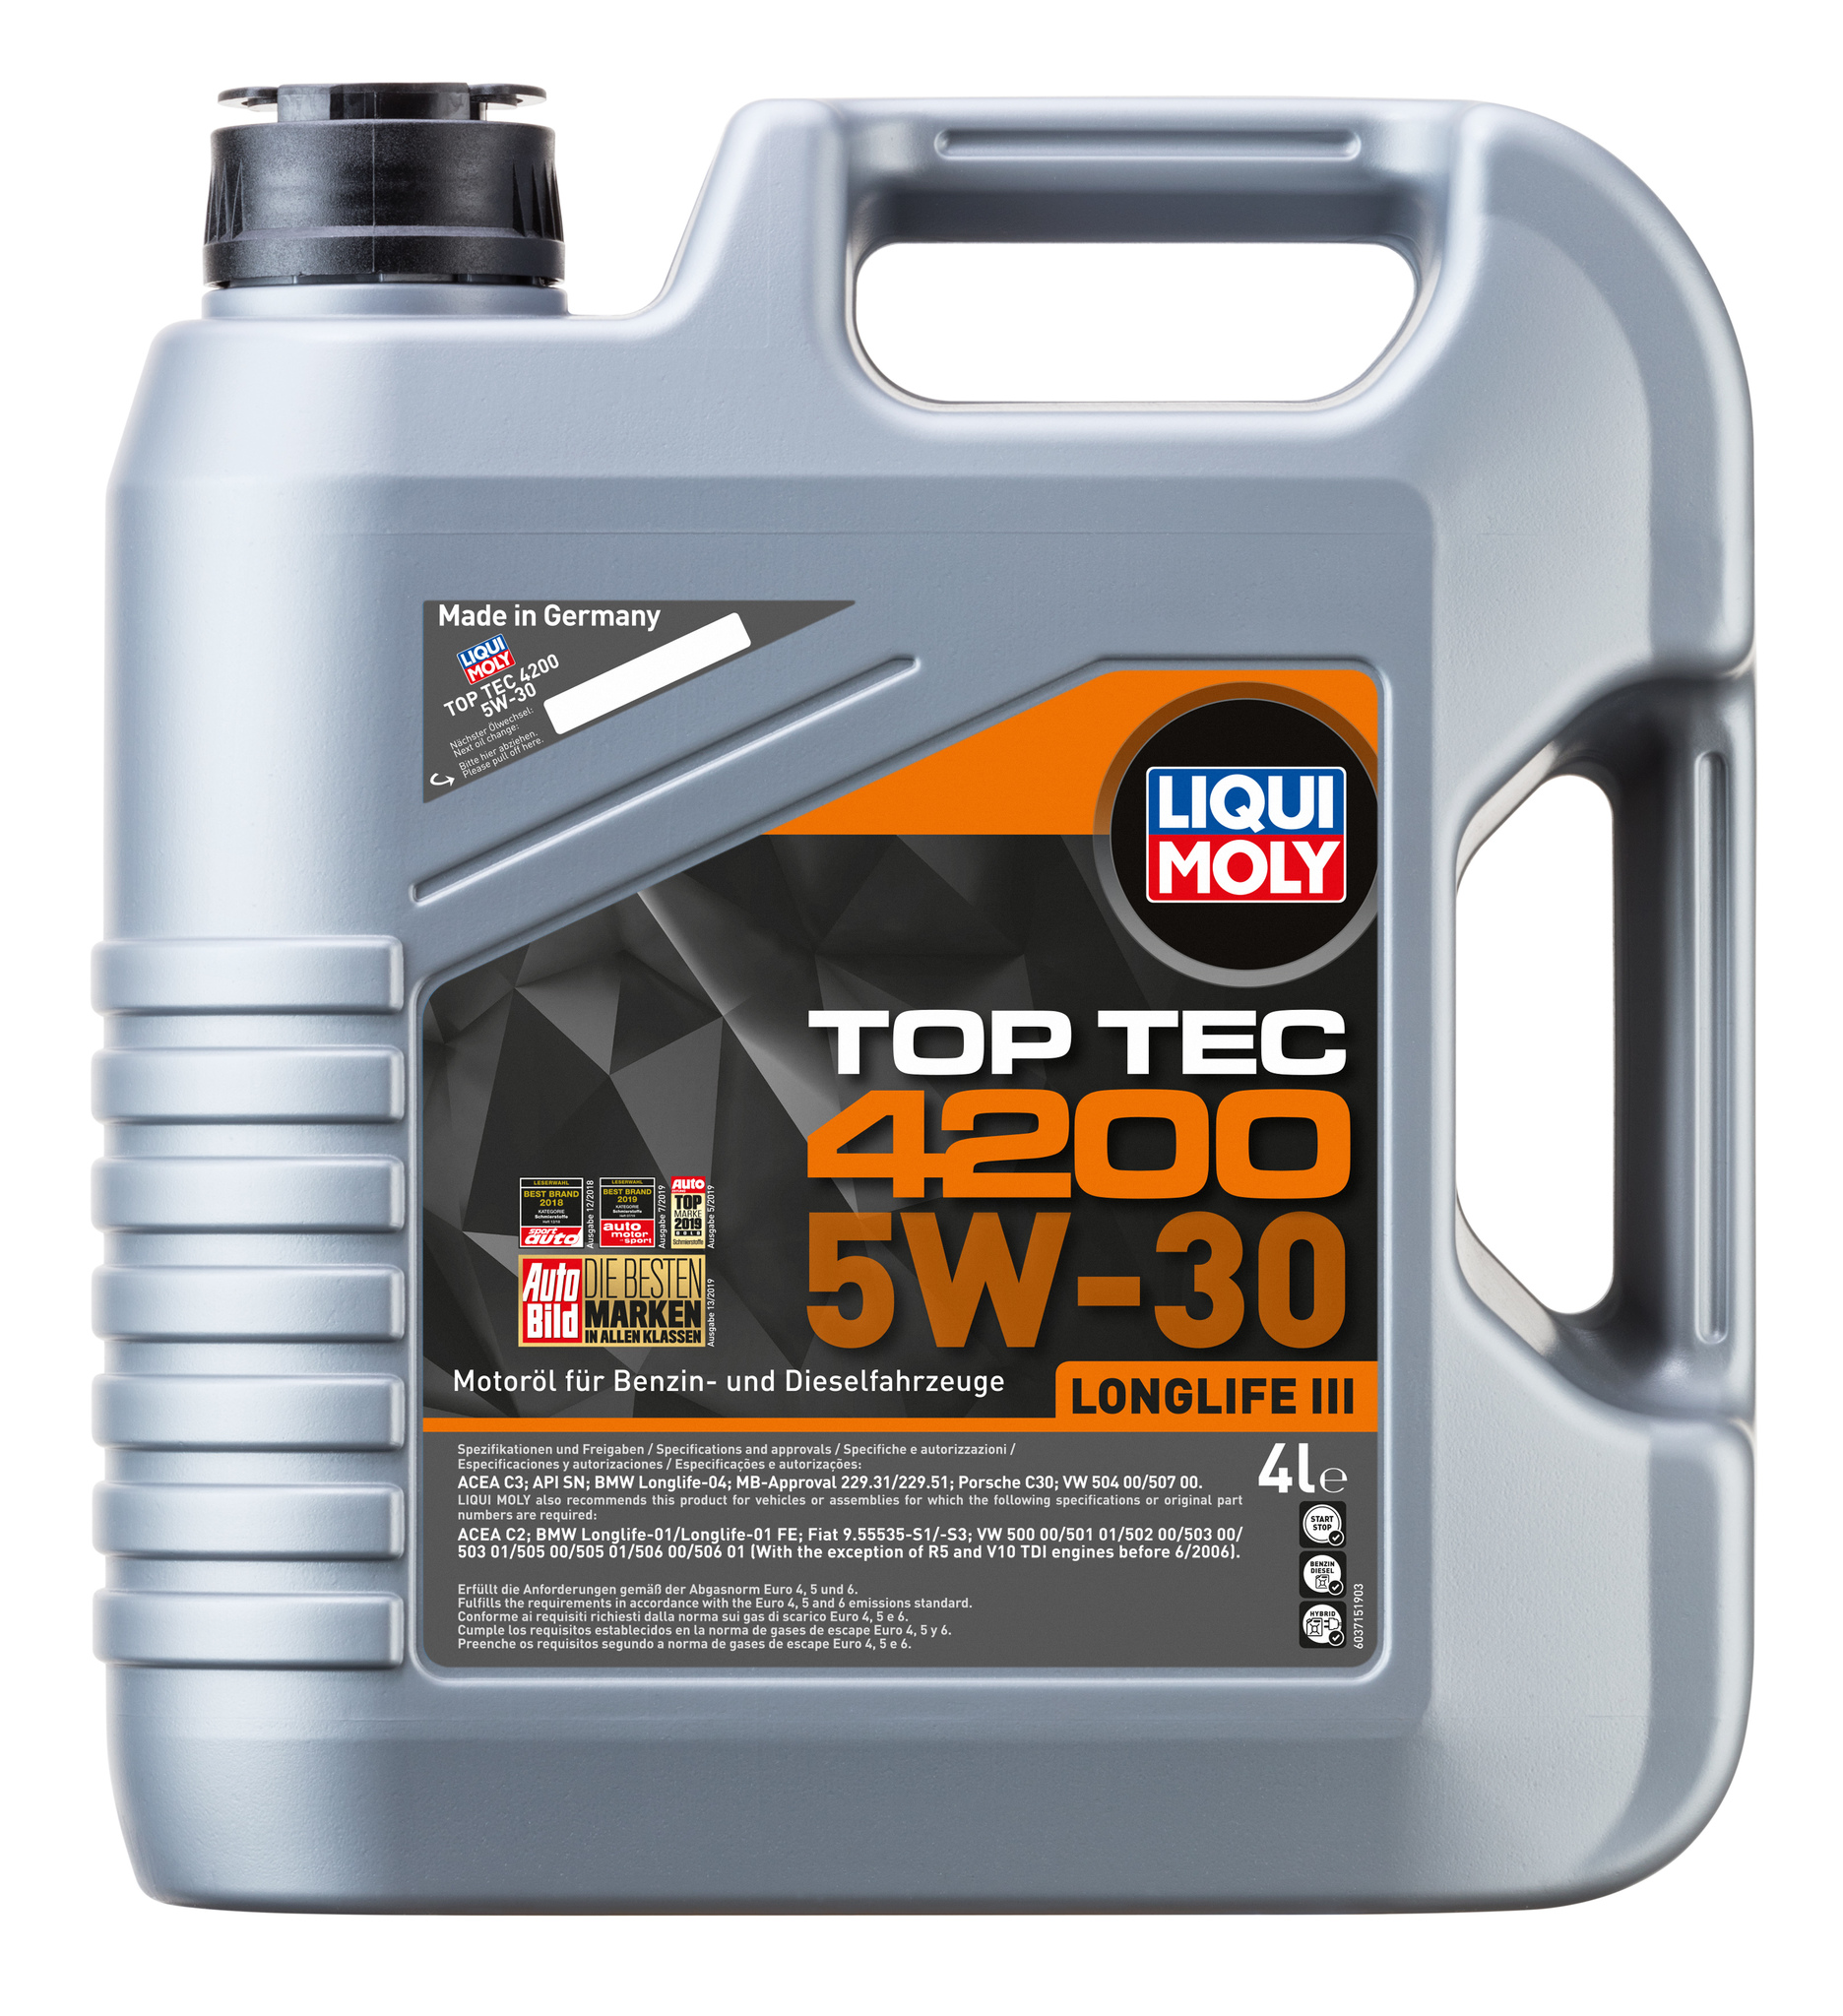 Моторное масло Liqui Moly Top Tec 4200  5W30 hc-синтетическое, 4л